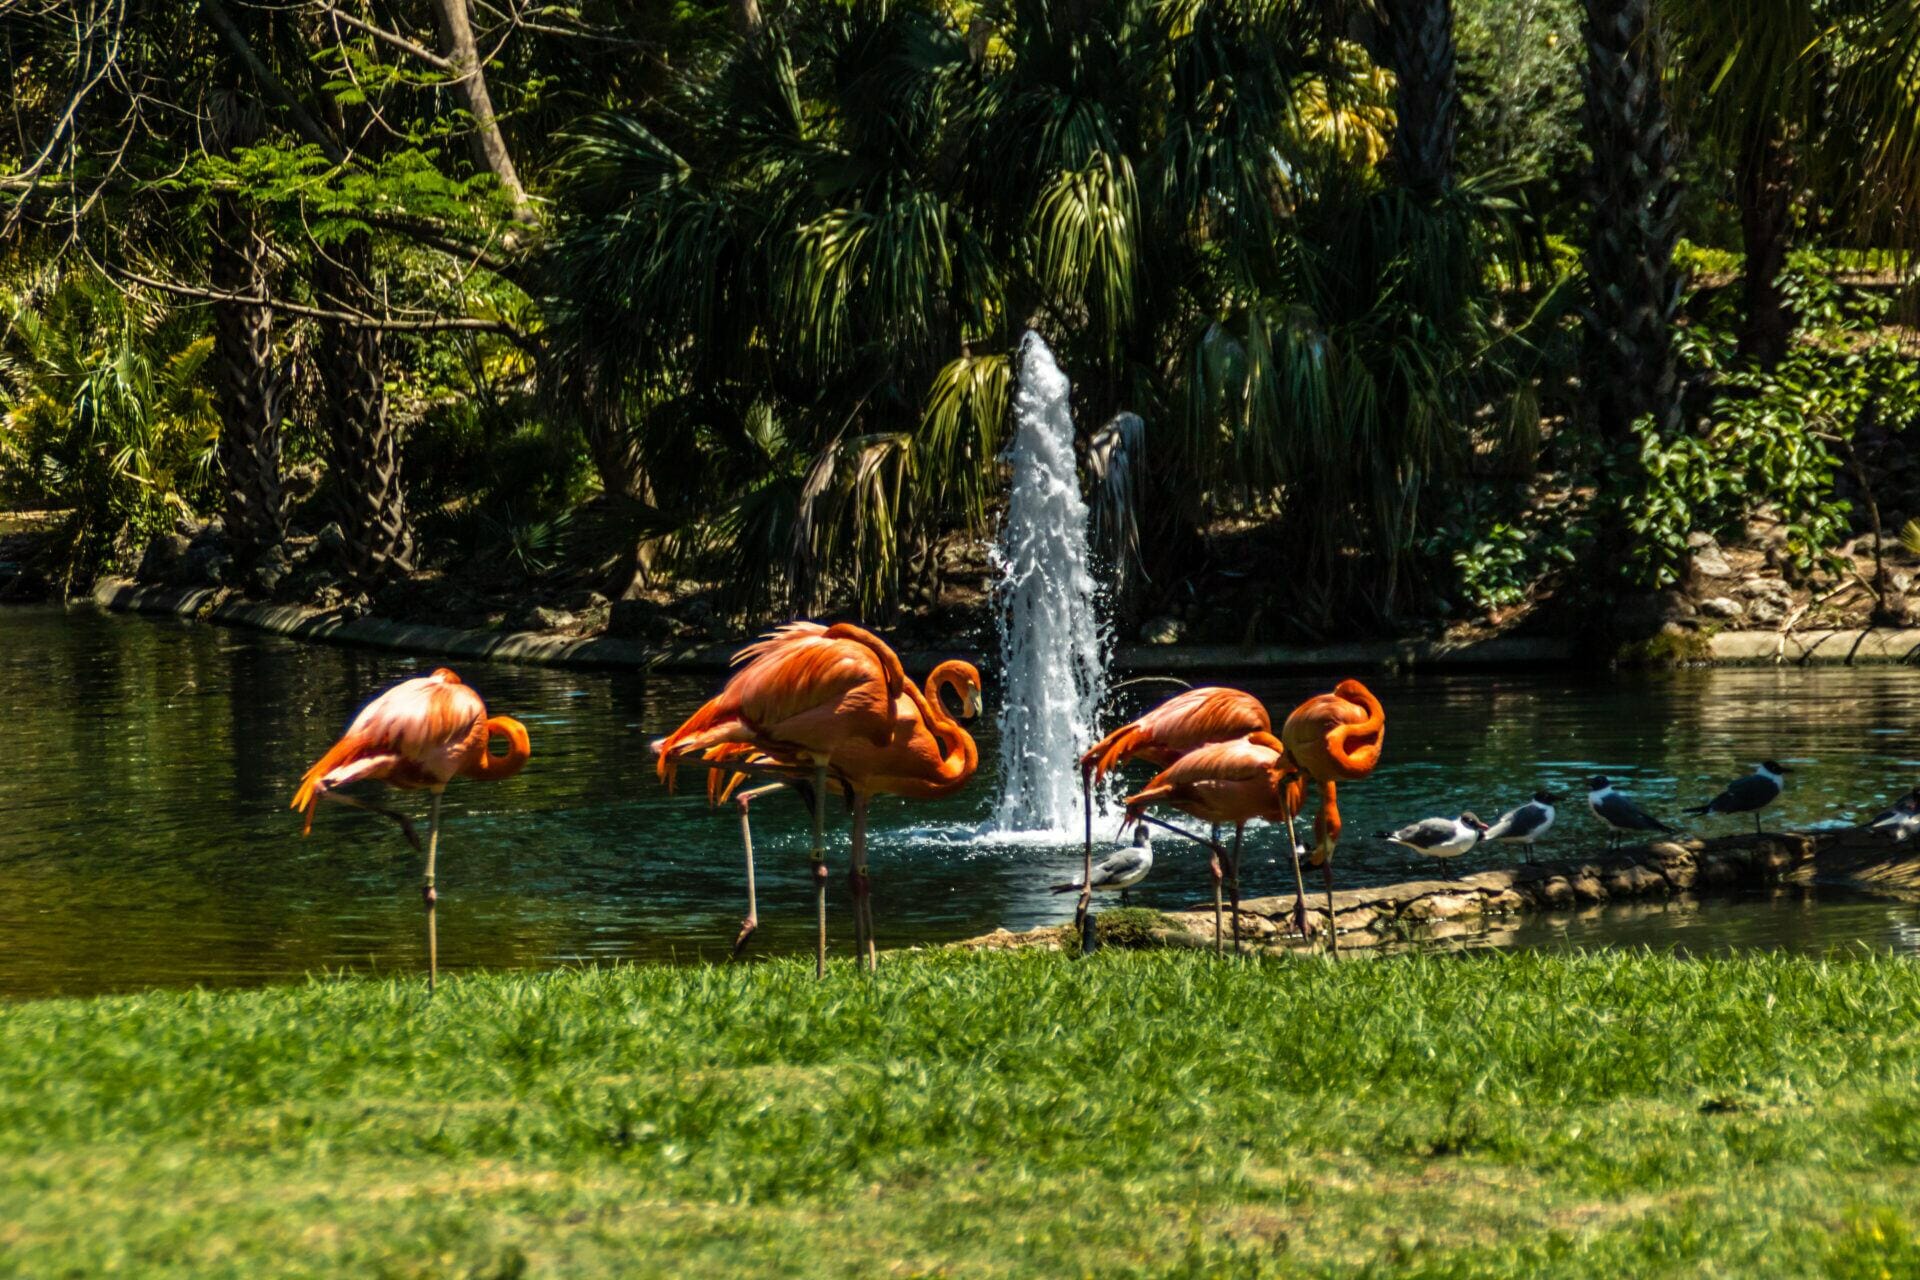 Caribean flamingos gather in groups on their island. Busch Gardens, Tampa Bay, Florida, United States.